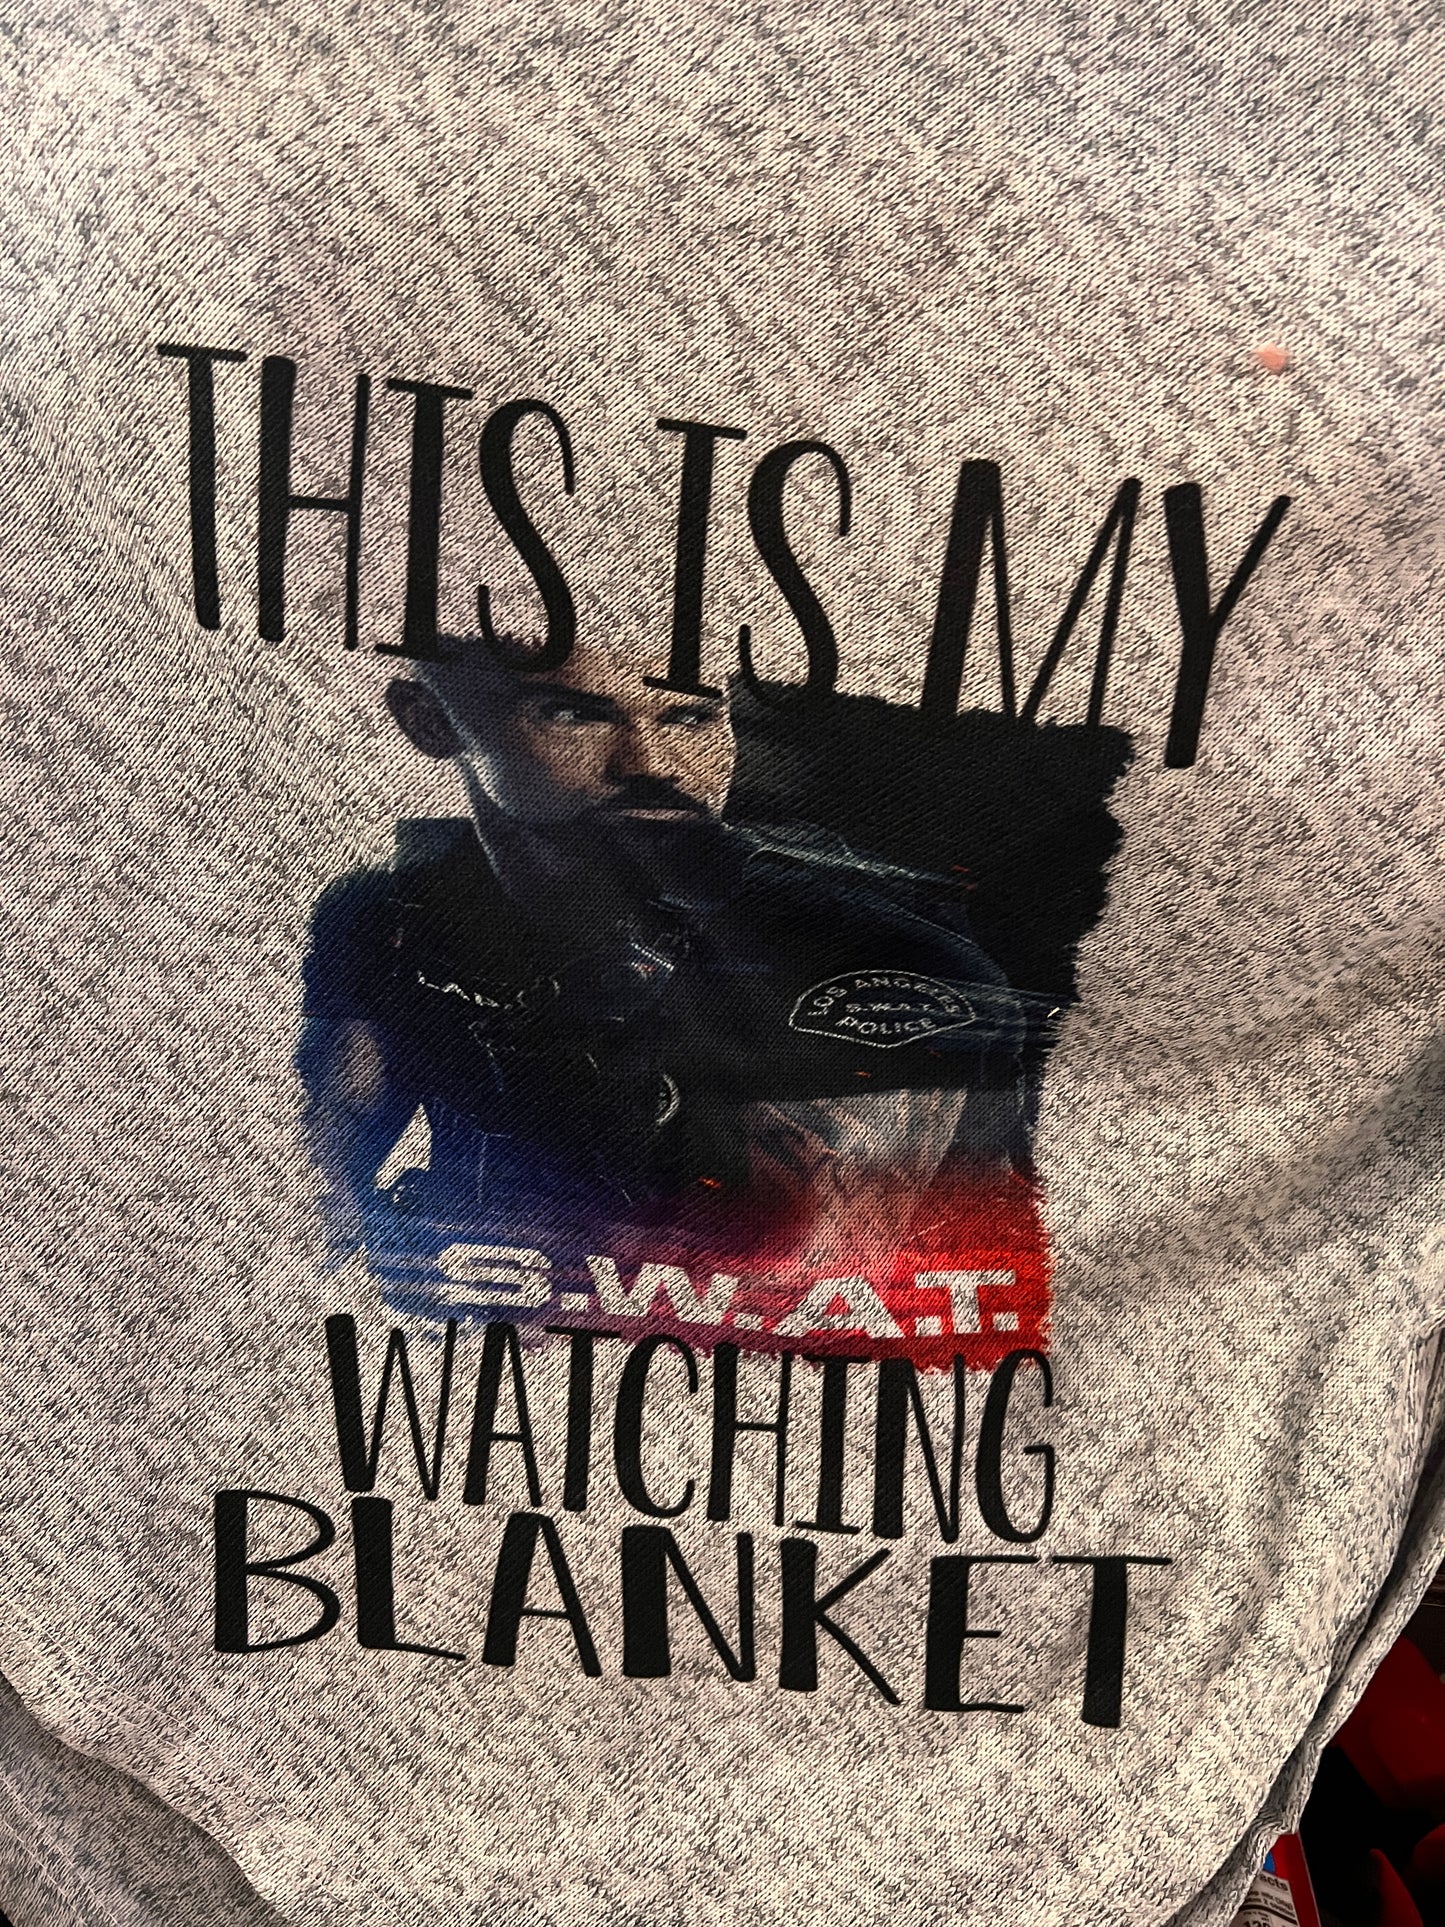 This is My SWAT Watching Blanket